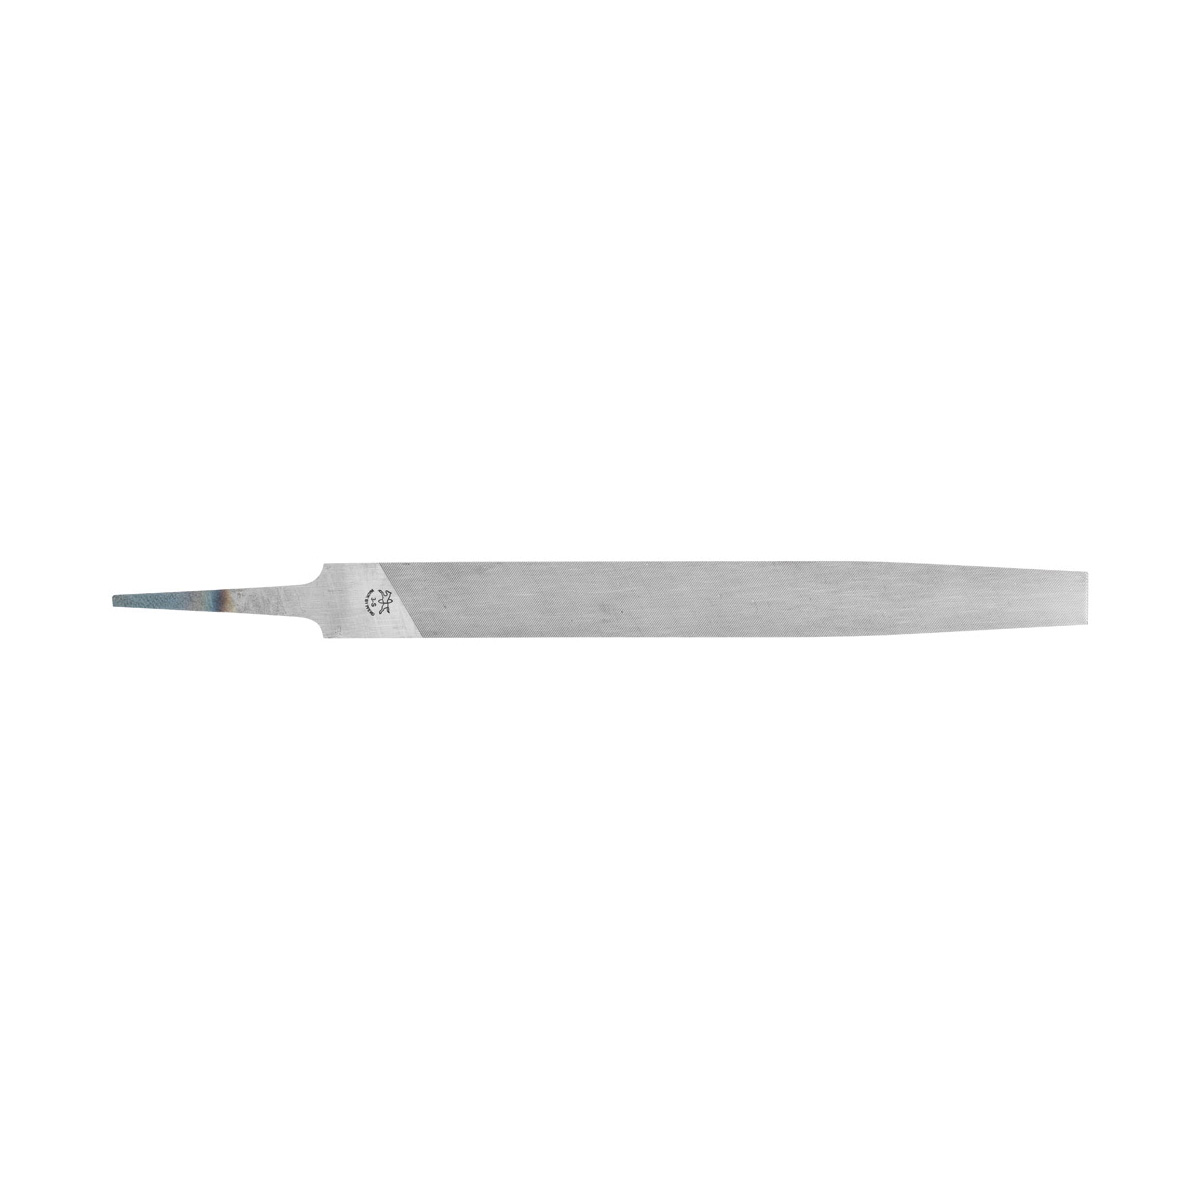 PFERD 19006 Mill File, Flat Profile, Smooth Cut, 35/32 in W Blade - 1